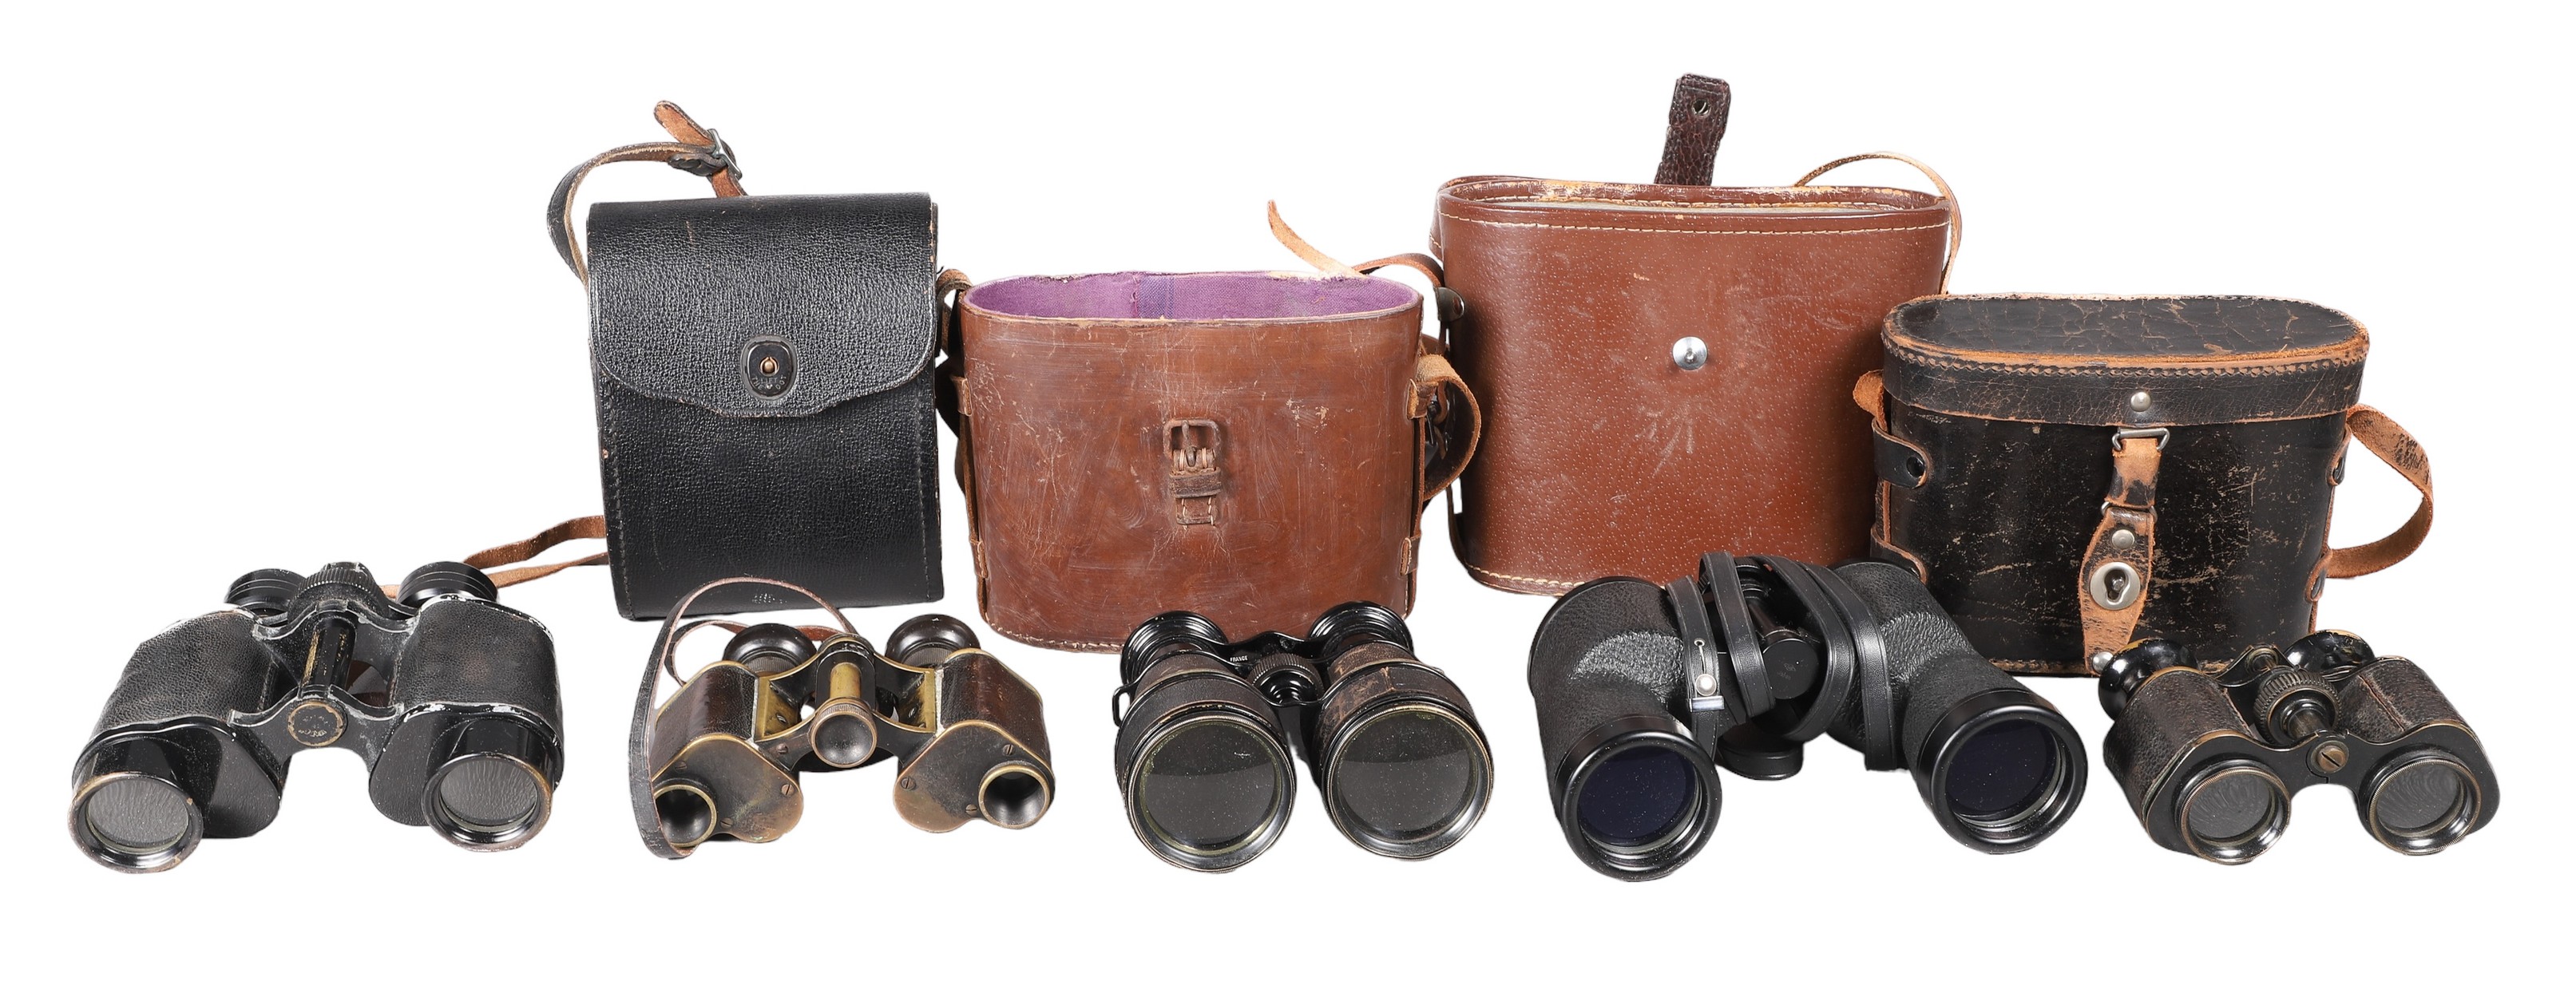 (5) Pair of binoculars, c/o Colmont